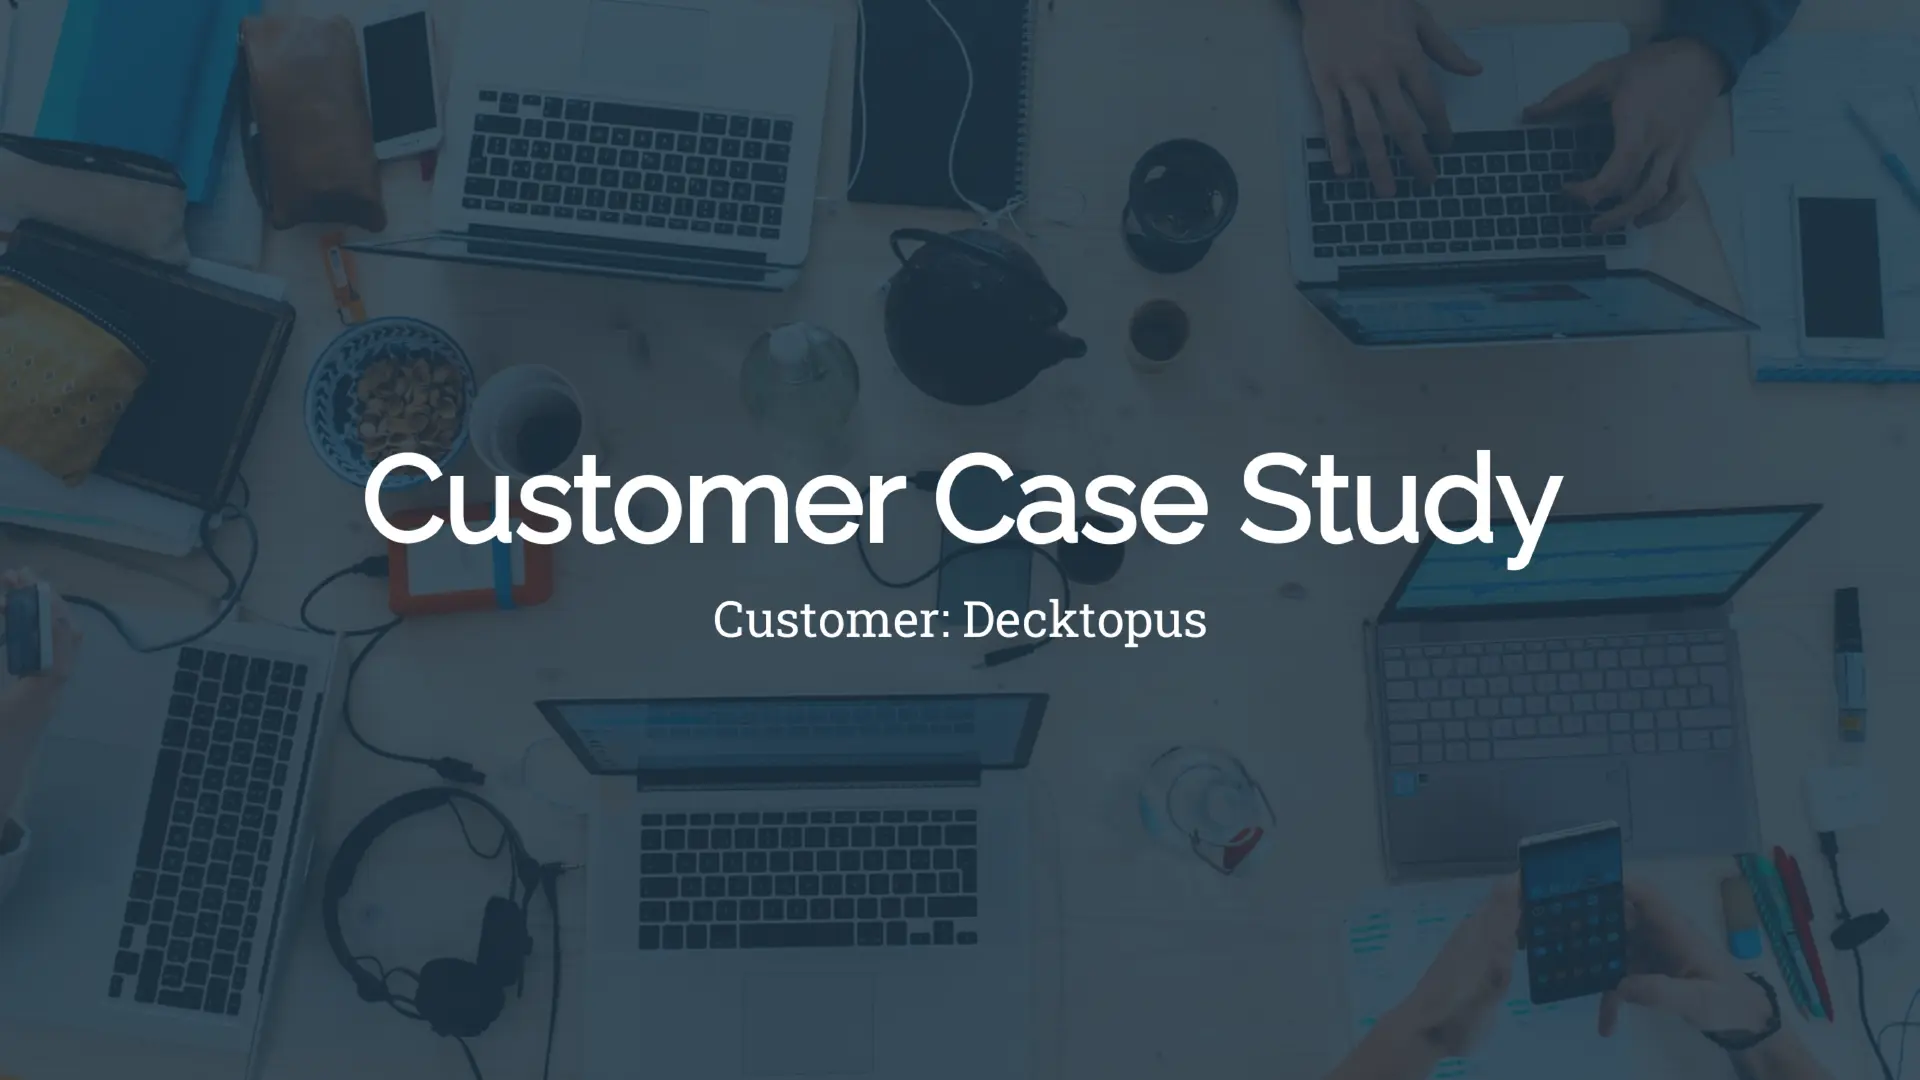 Customer case study